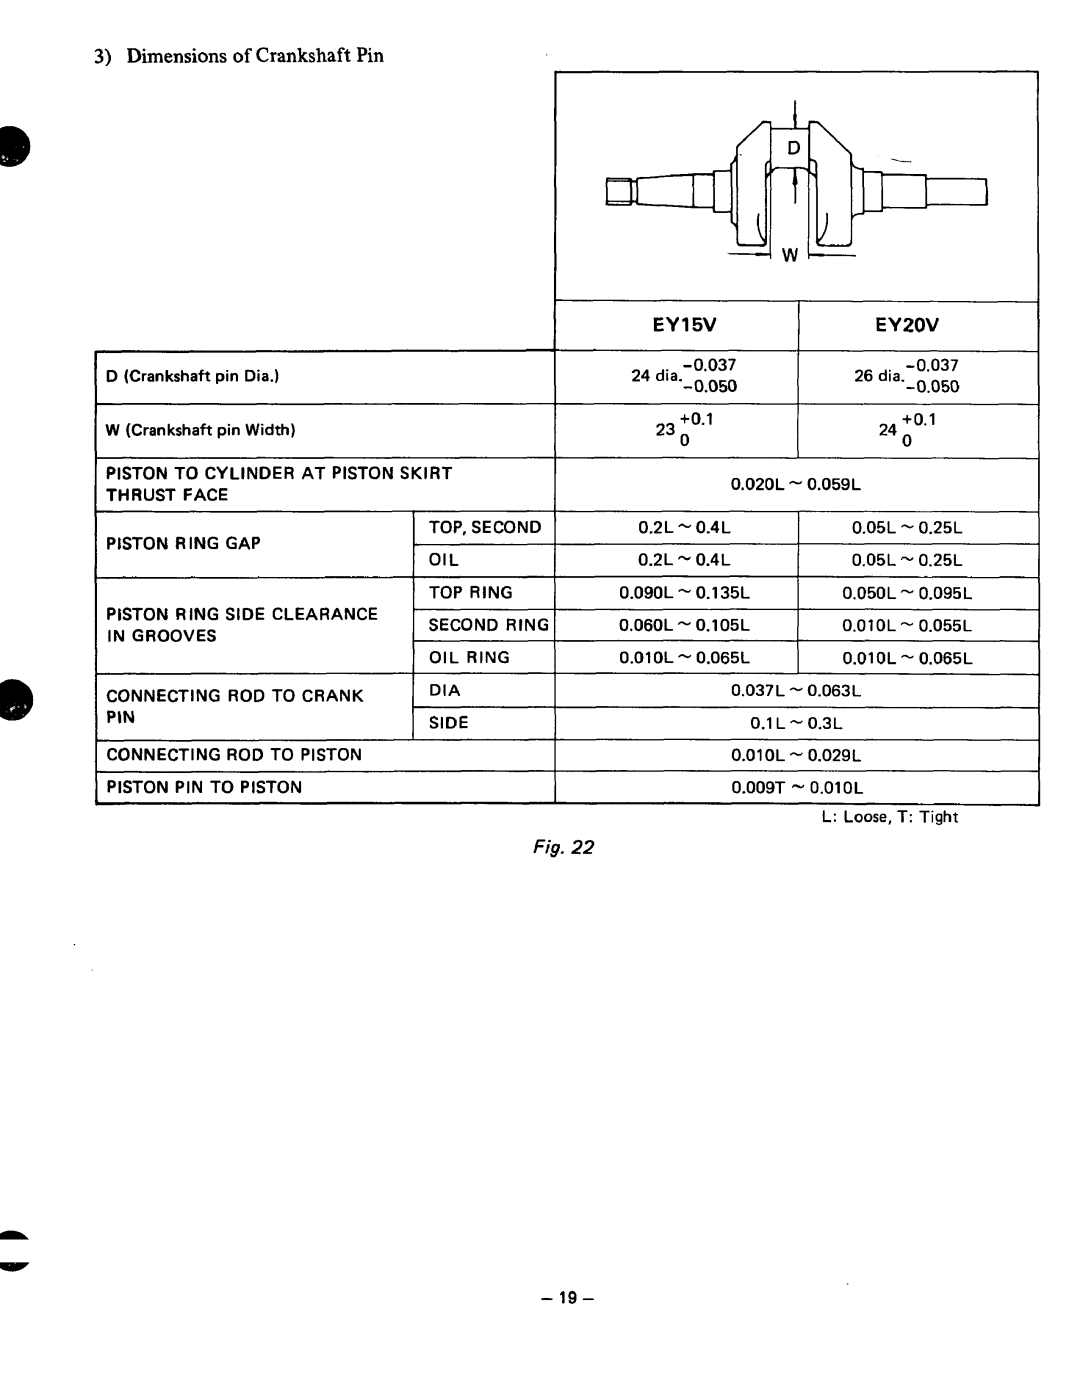 Subaru Robin Power Products EY20V Dimensions of Crankshaft Pin, EY15V, Eyzov, 01 L, Second, 24 io”, 0.020L -0.059L, 0.009T 